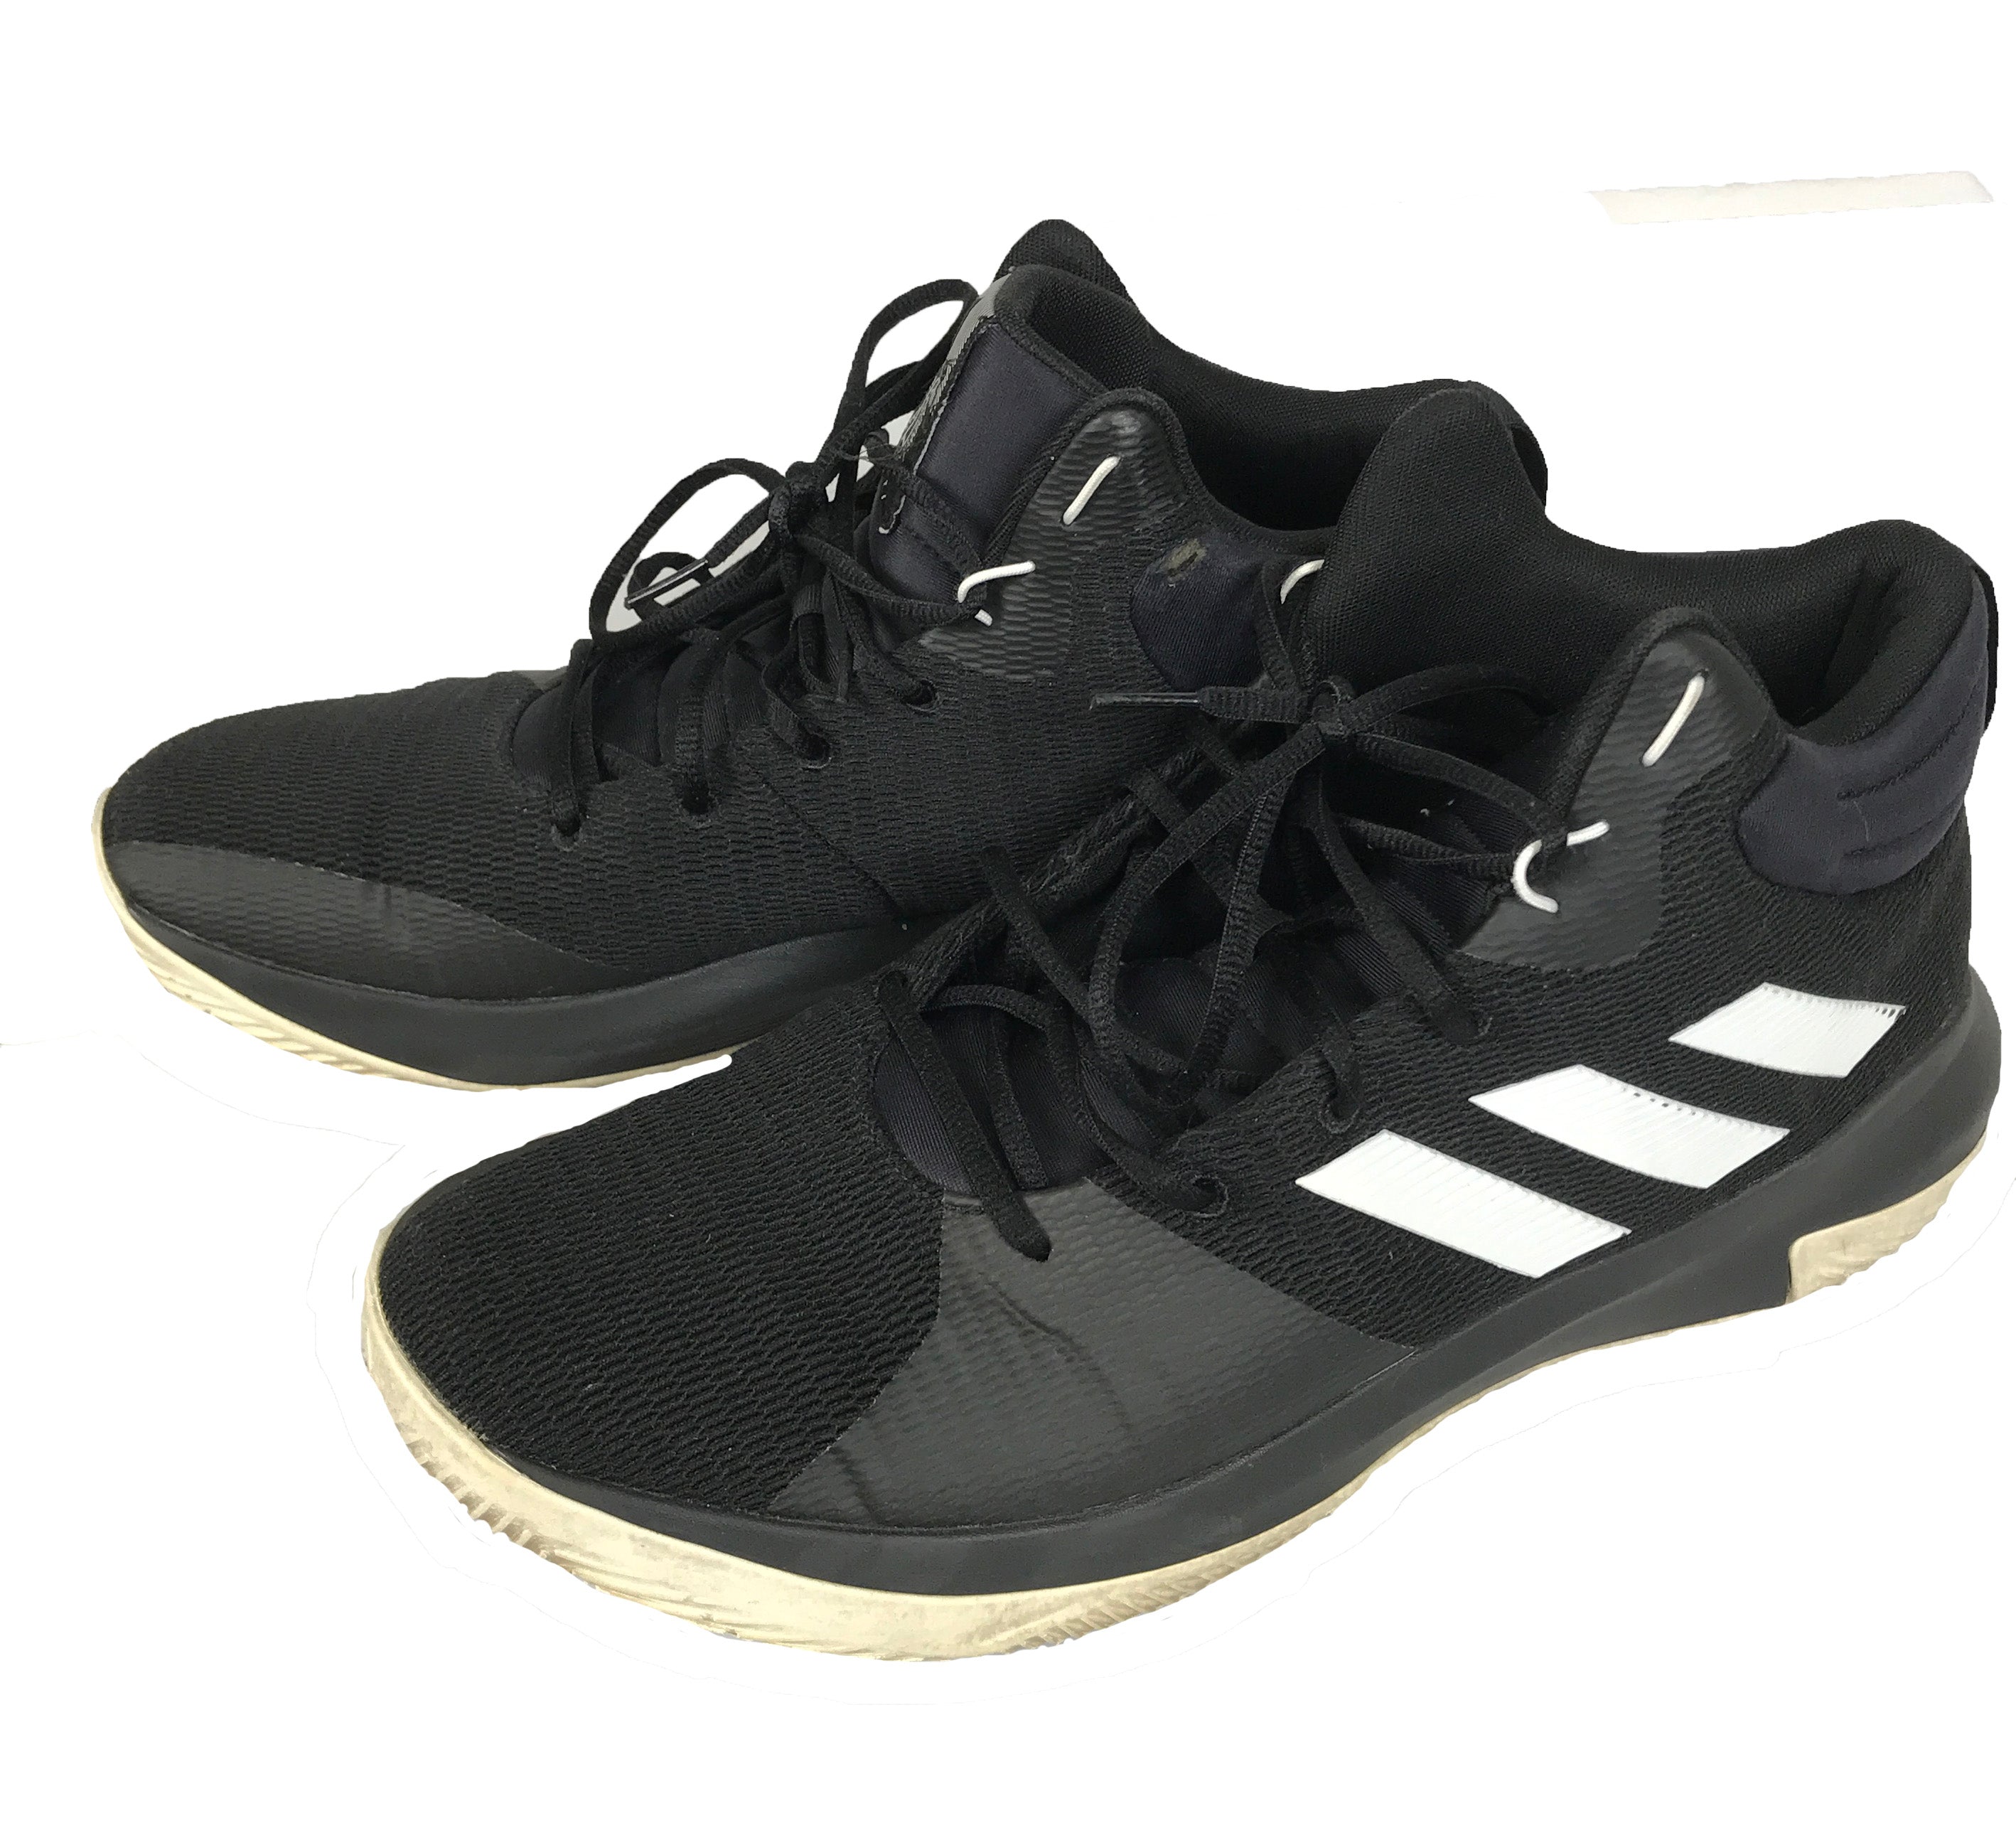 Adidas Black Basketball Shoes Men's Size 14